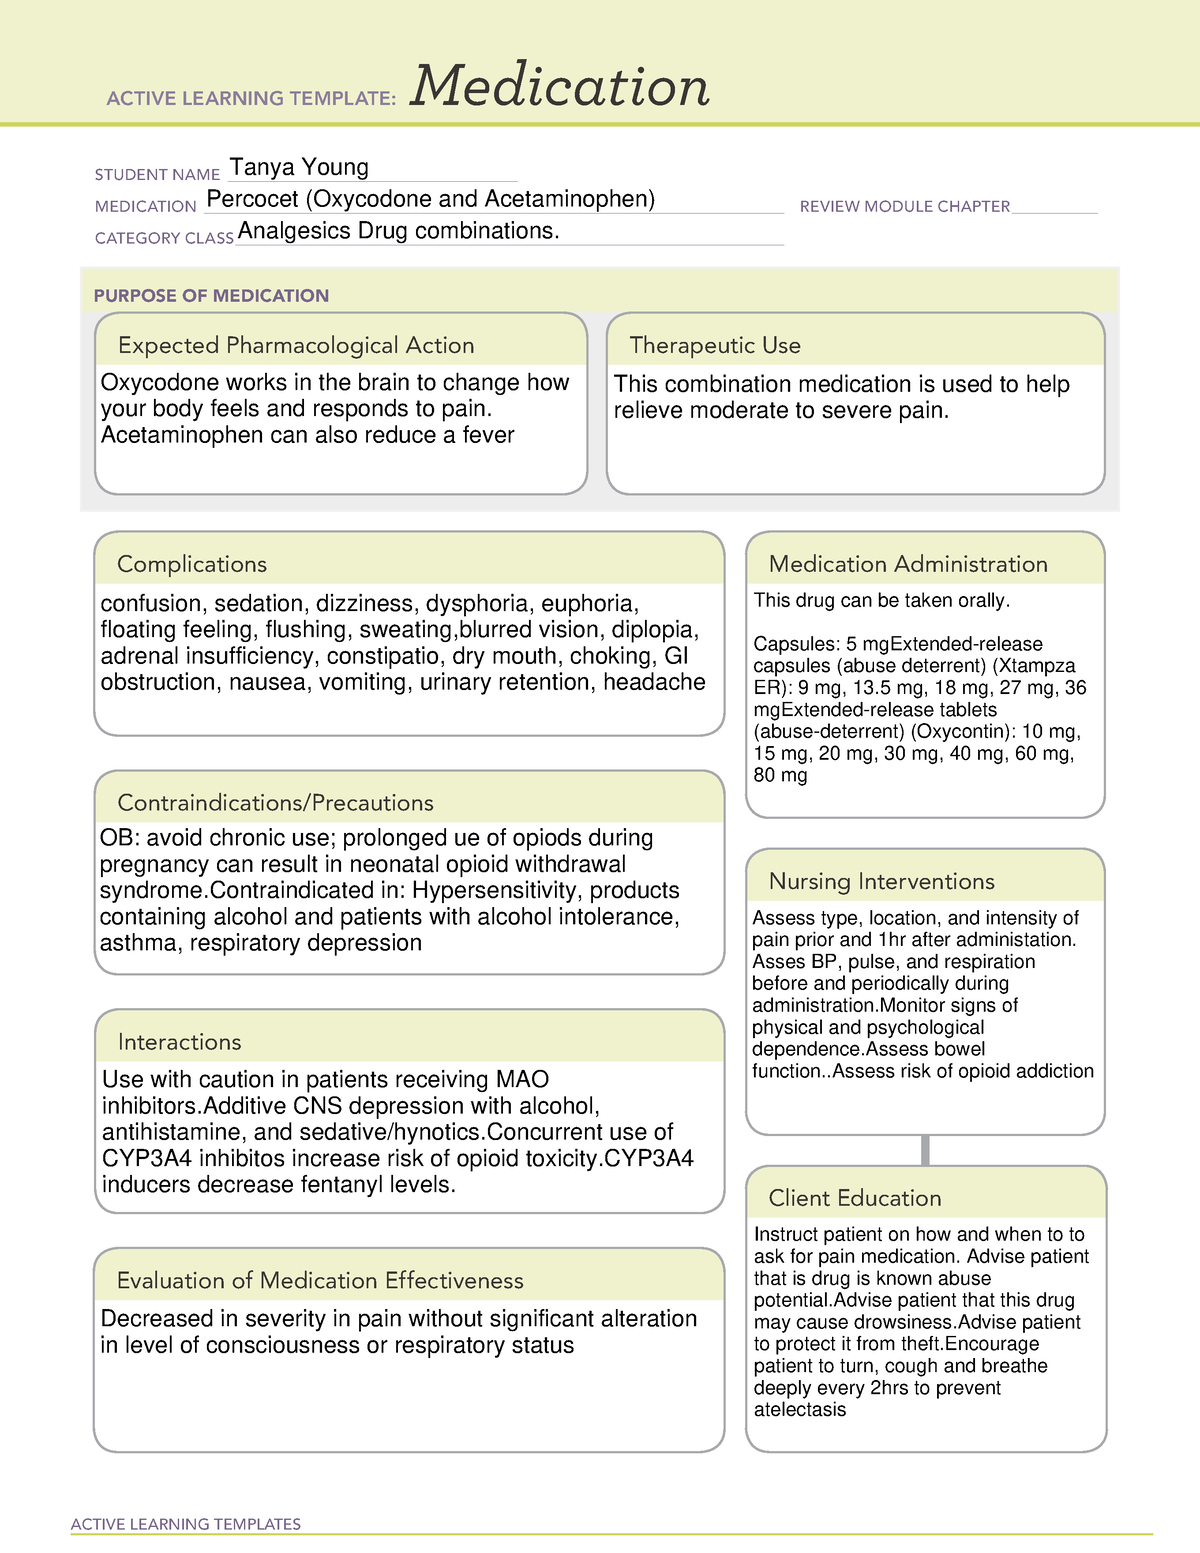 ati-percocet-ati-medication-template-active-learning-templates